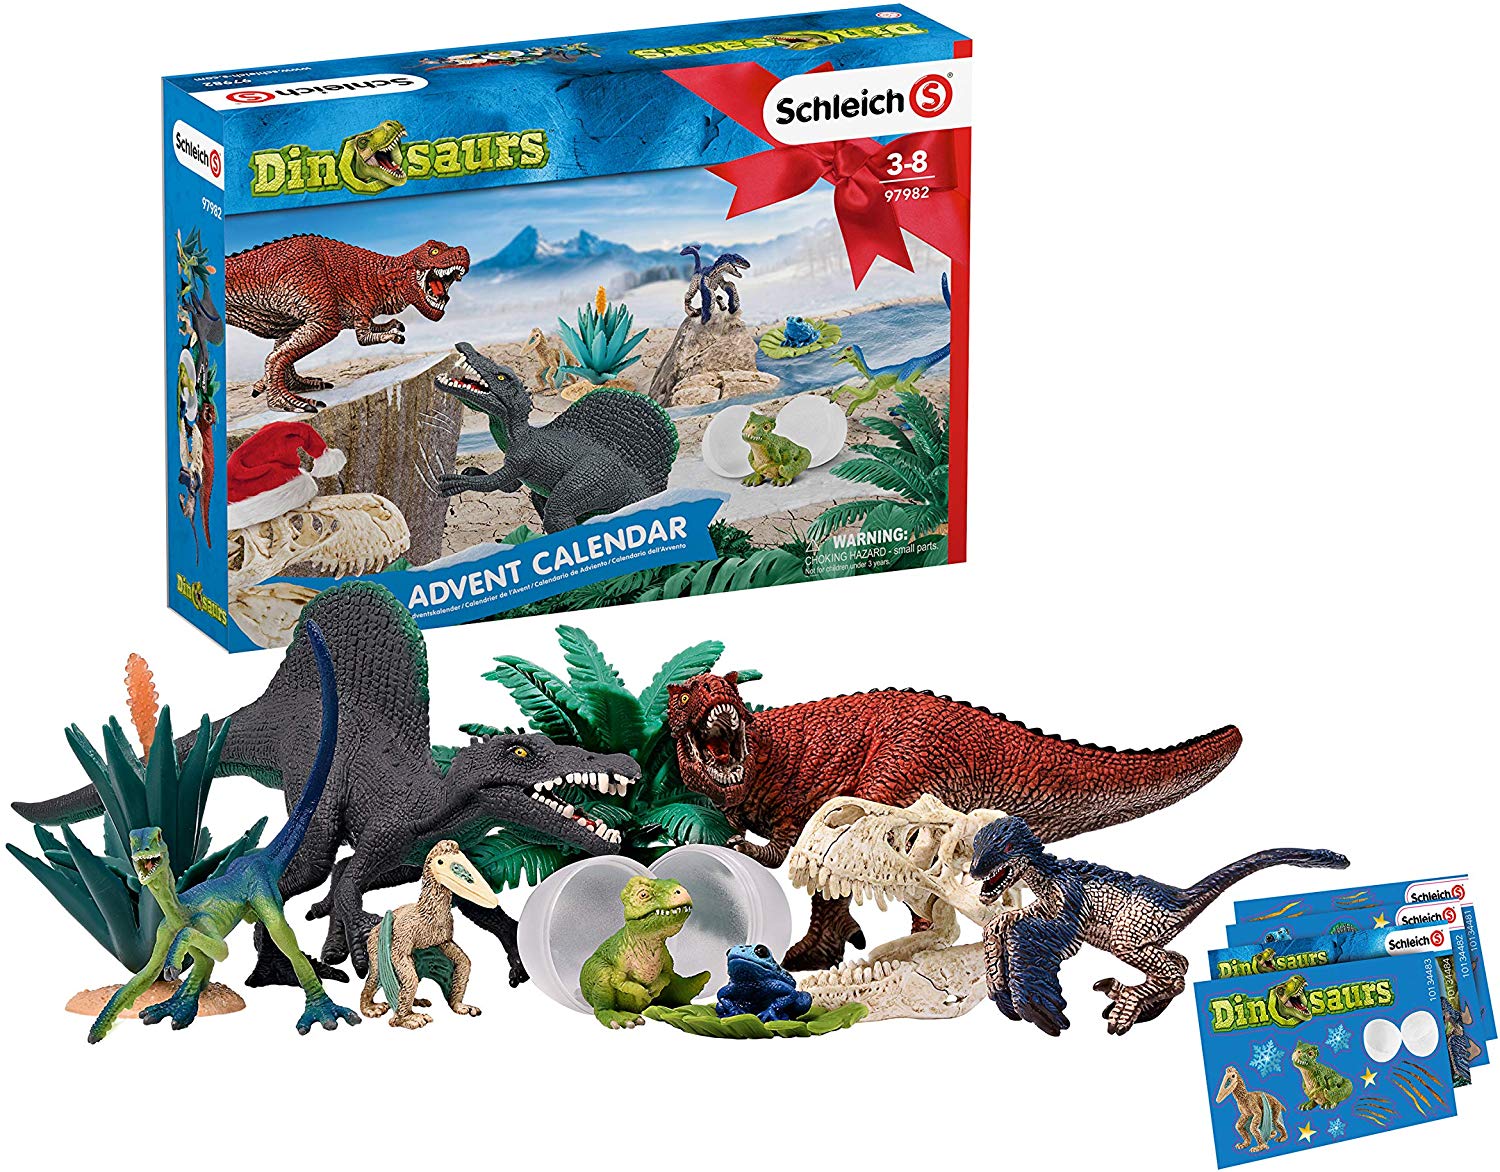 Schleich 97982 Advent Calendar Dinosaurs 2019 Toy Figure, Multi-Coloured